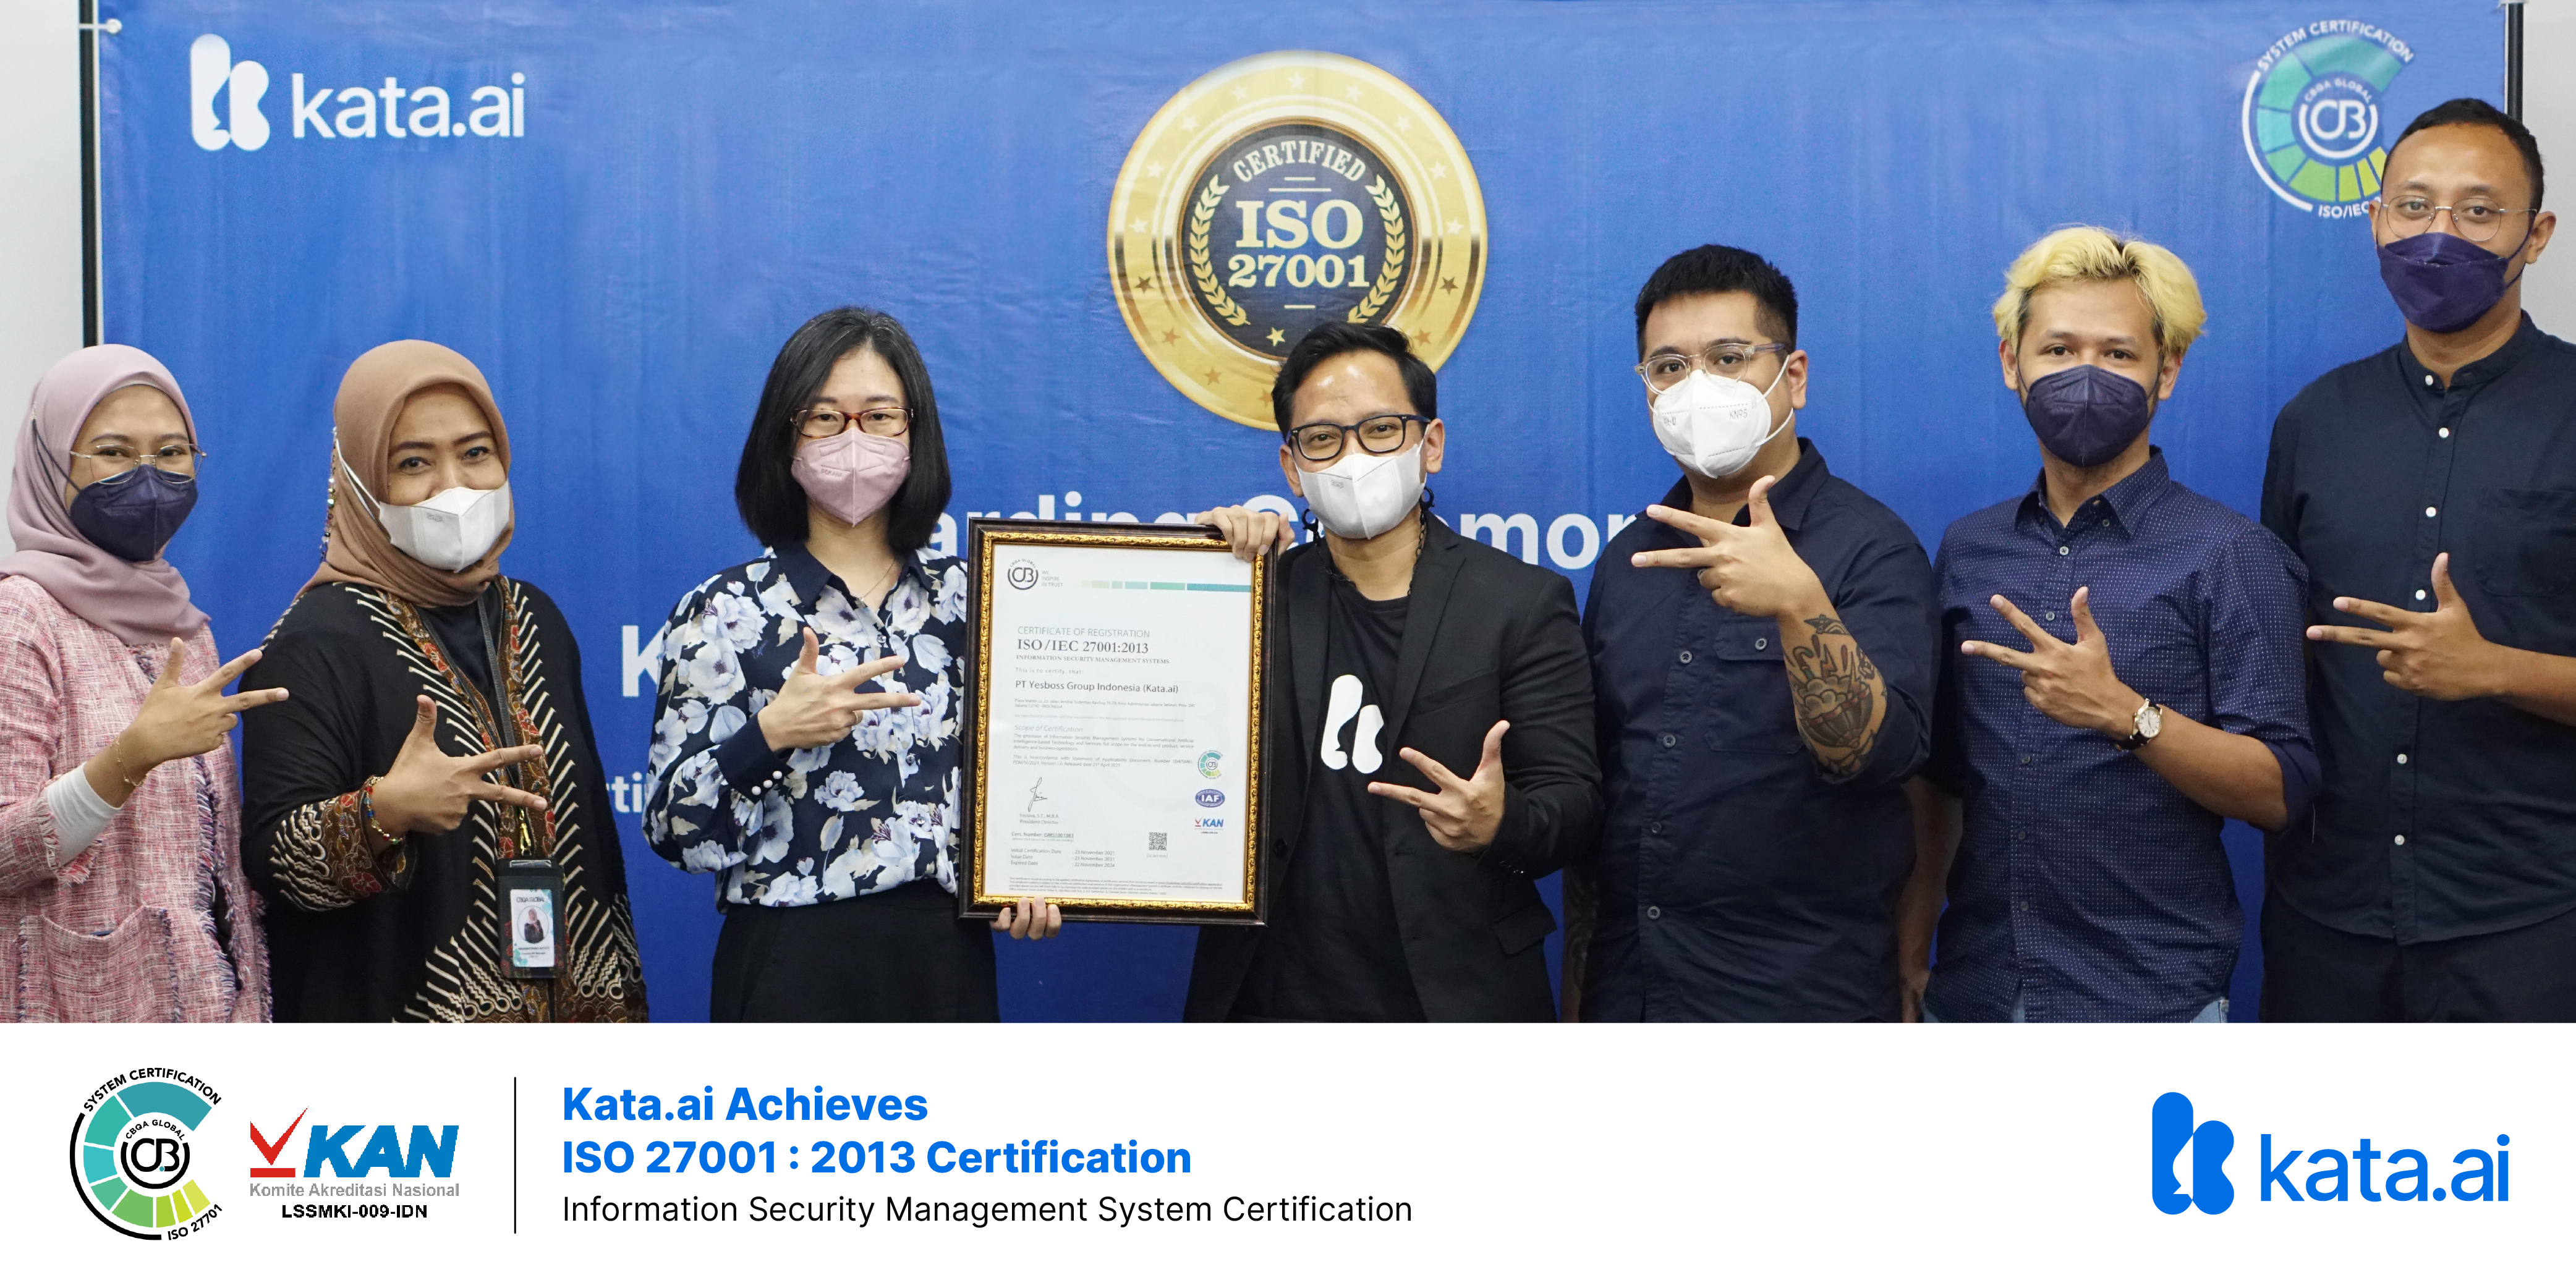 Kata.ai Achieves ISO 27001:2013 Certification